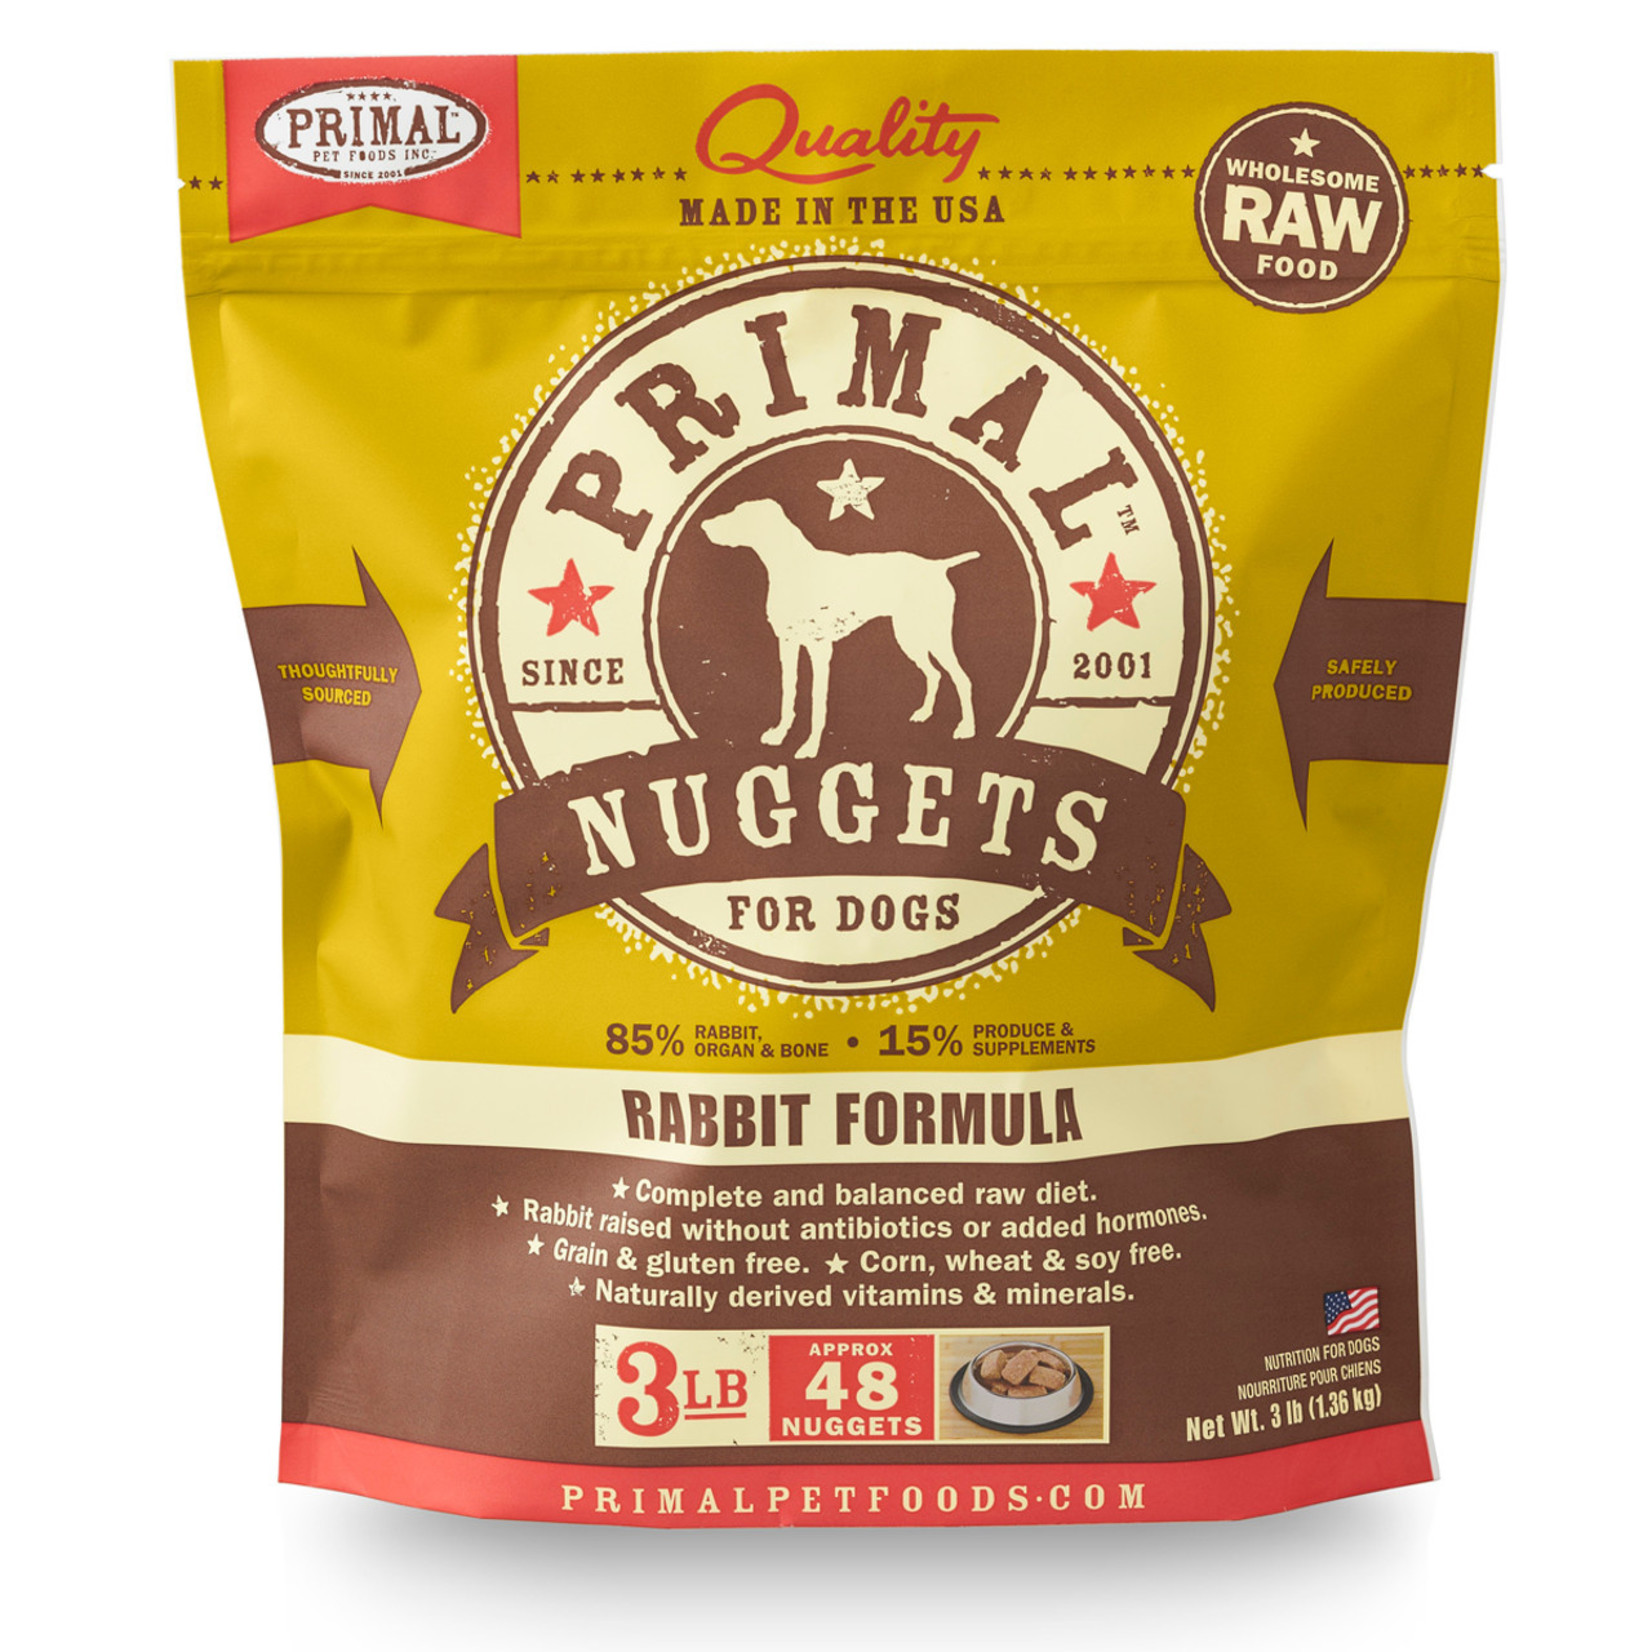 Primal Pet Foods Primal Frozen Raw Nuggets - Rabbit Formula for Dogs